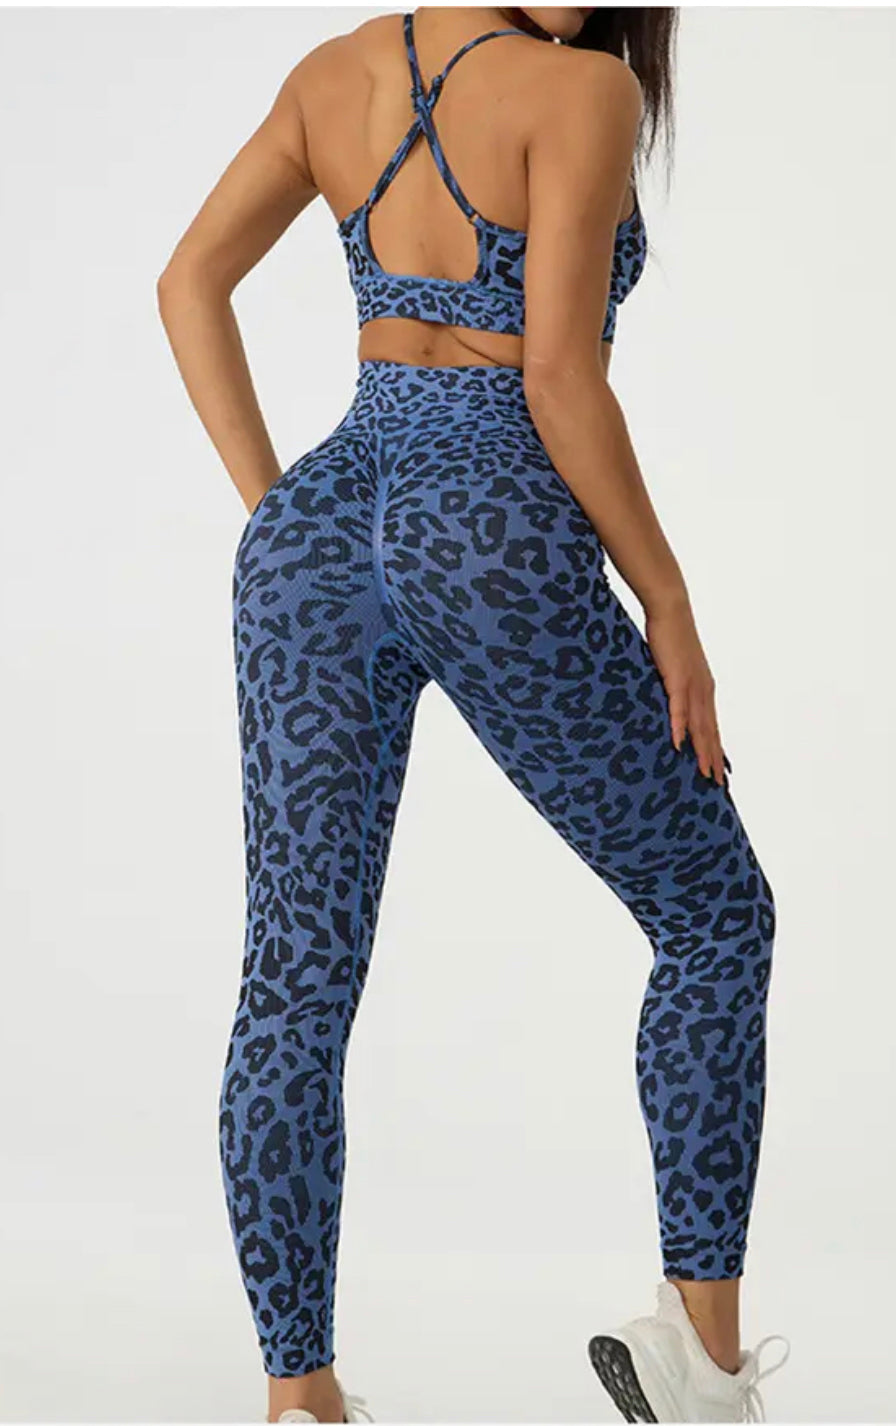 NEW Next Level Grrrl Leopard Print / Cheetah Gym Leggings L/XL Ali